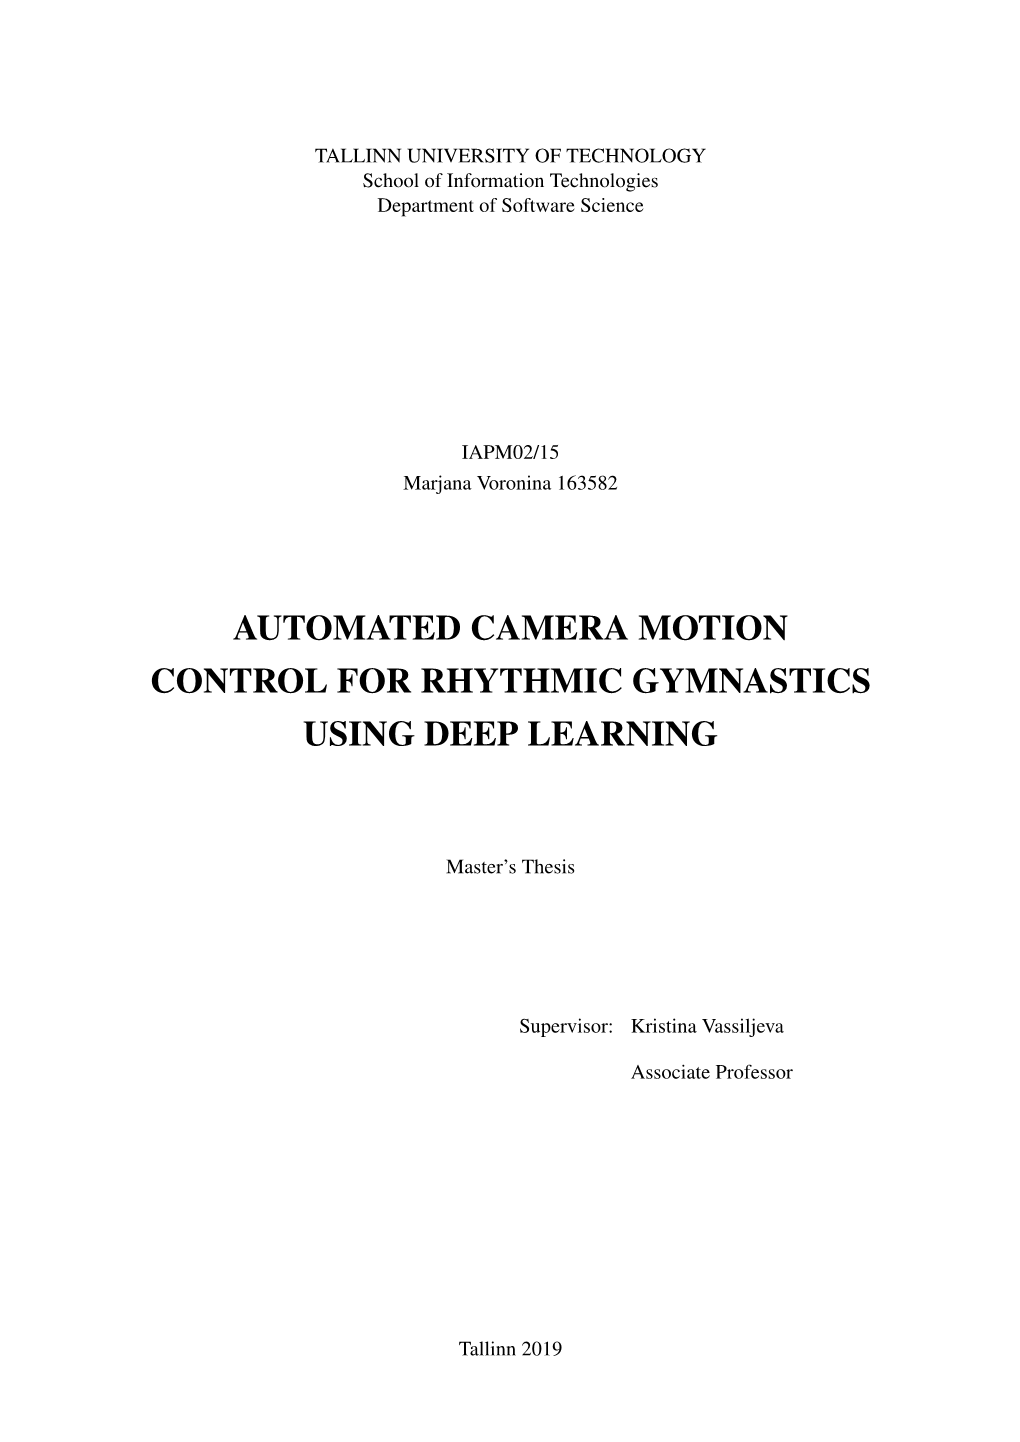 Automated Camera Motion Control for Rhythmic Gymnastics Using Deep Learning